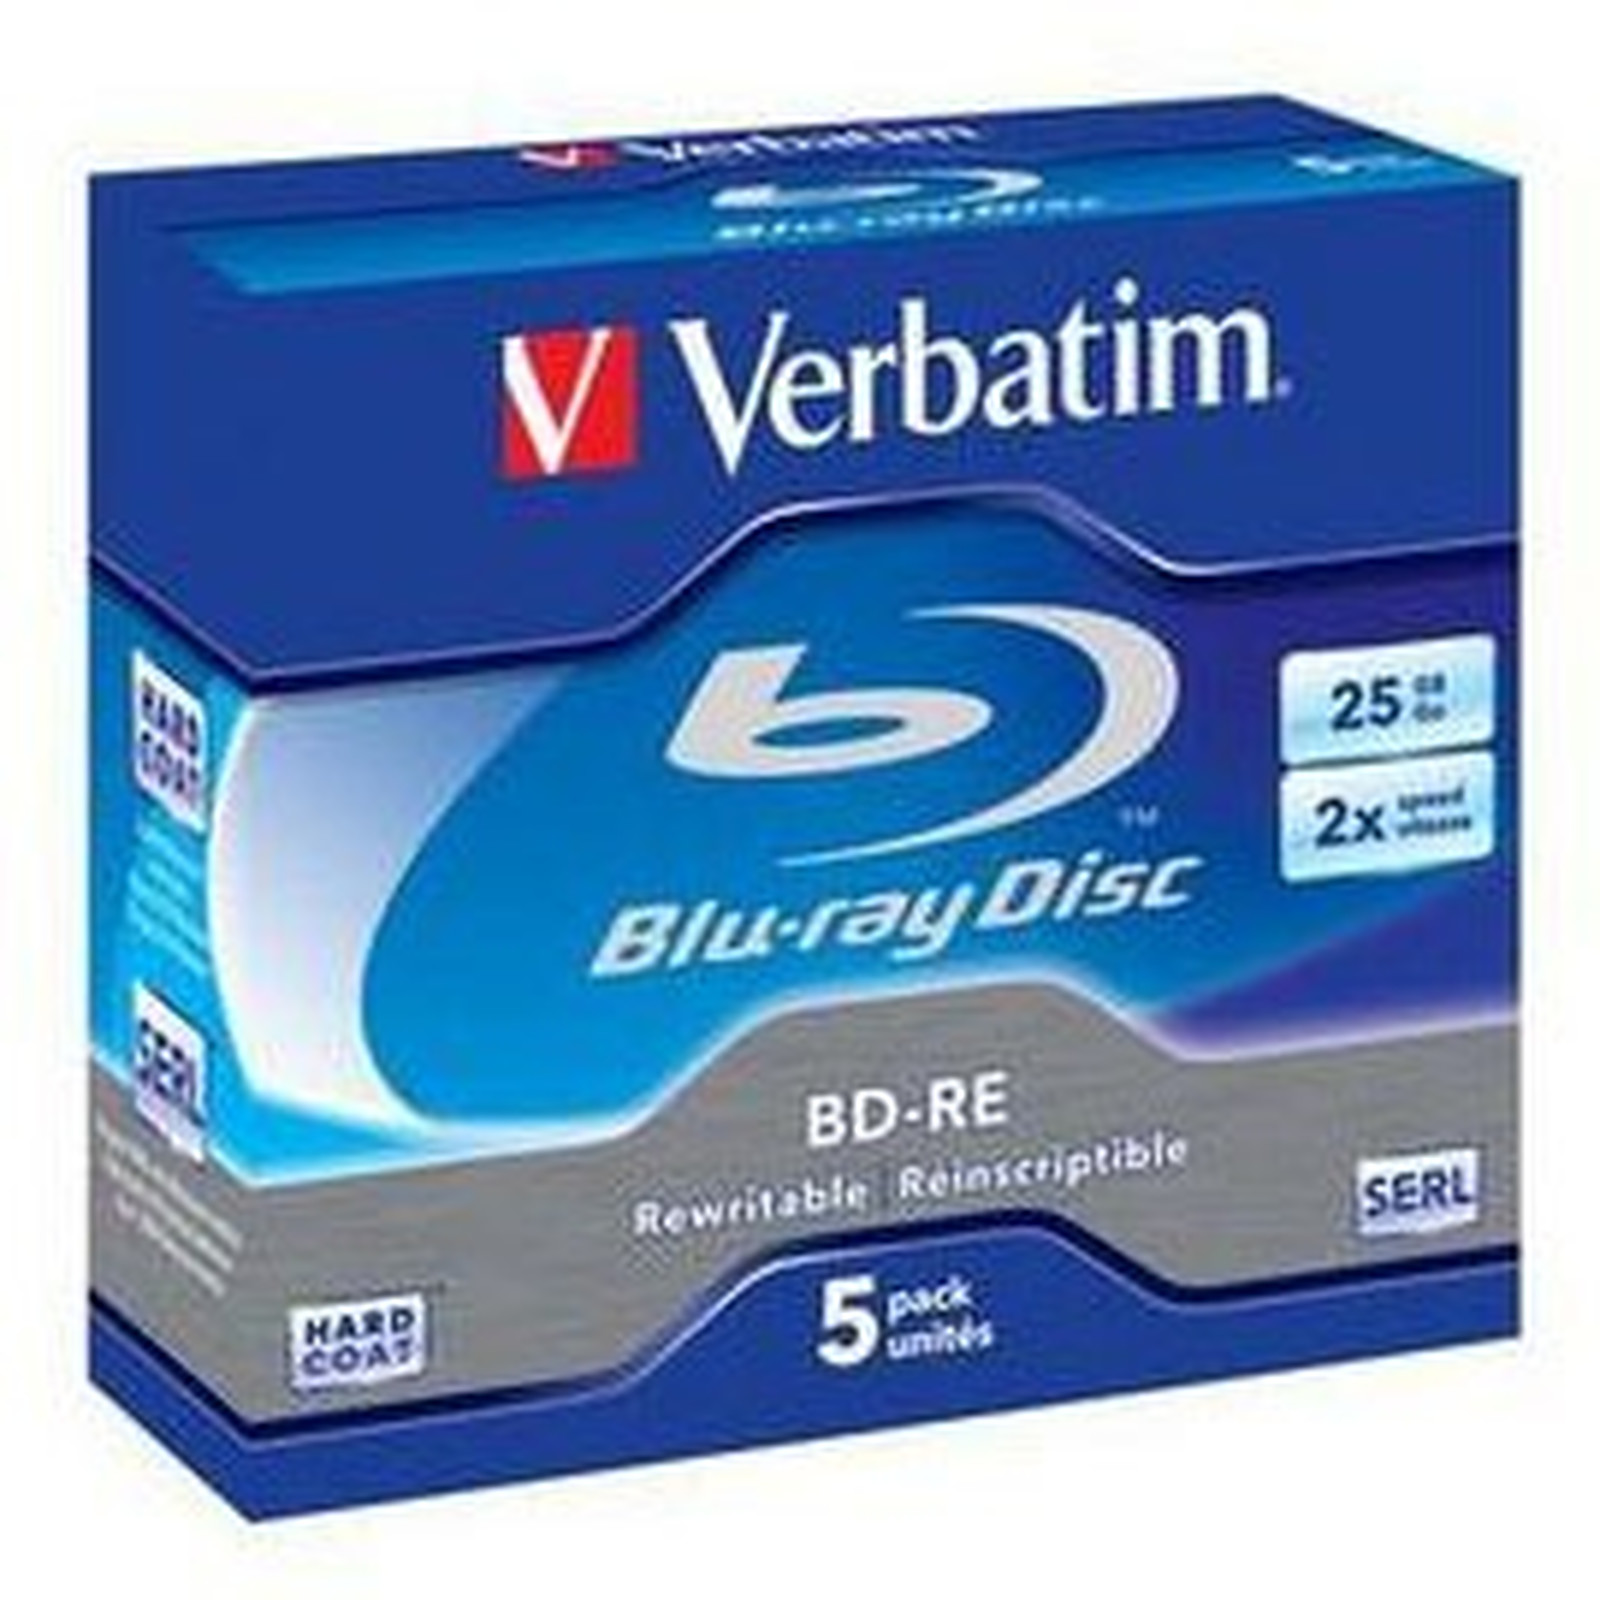 Verbatim BD-RE 25 Go 2x (par 5, boite) - Blu-ray vierge Verbatim